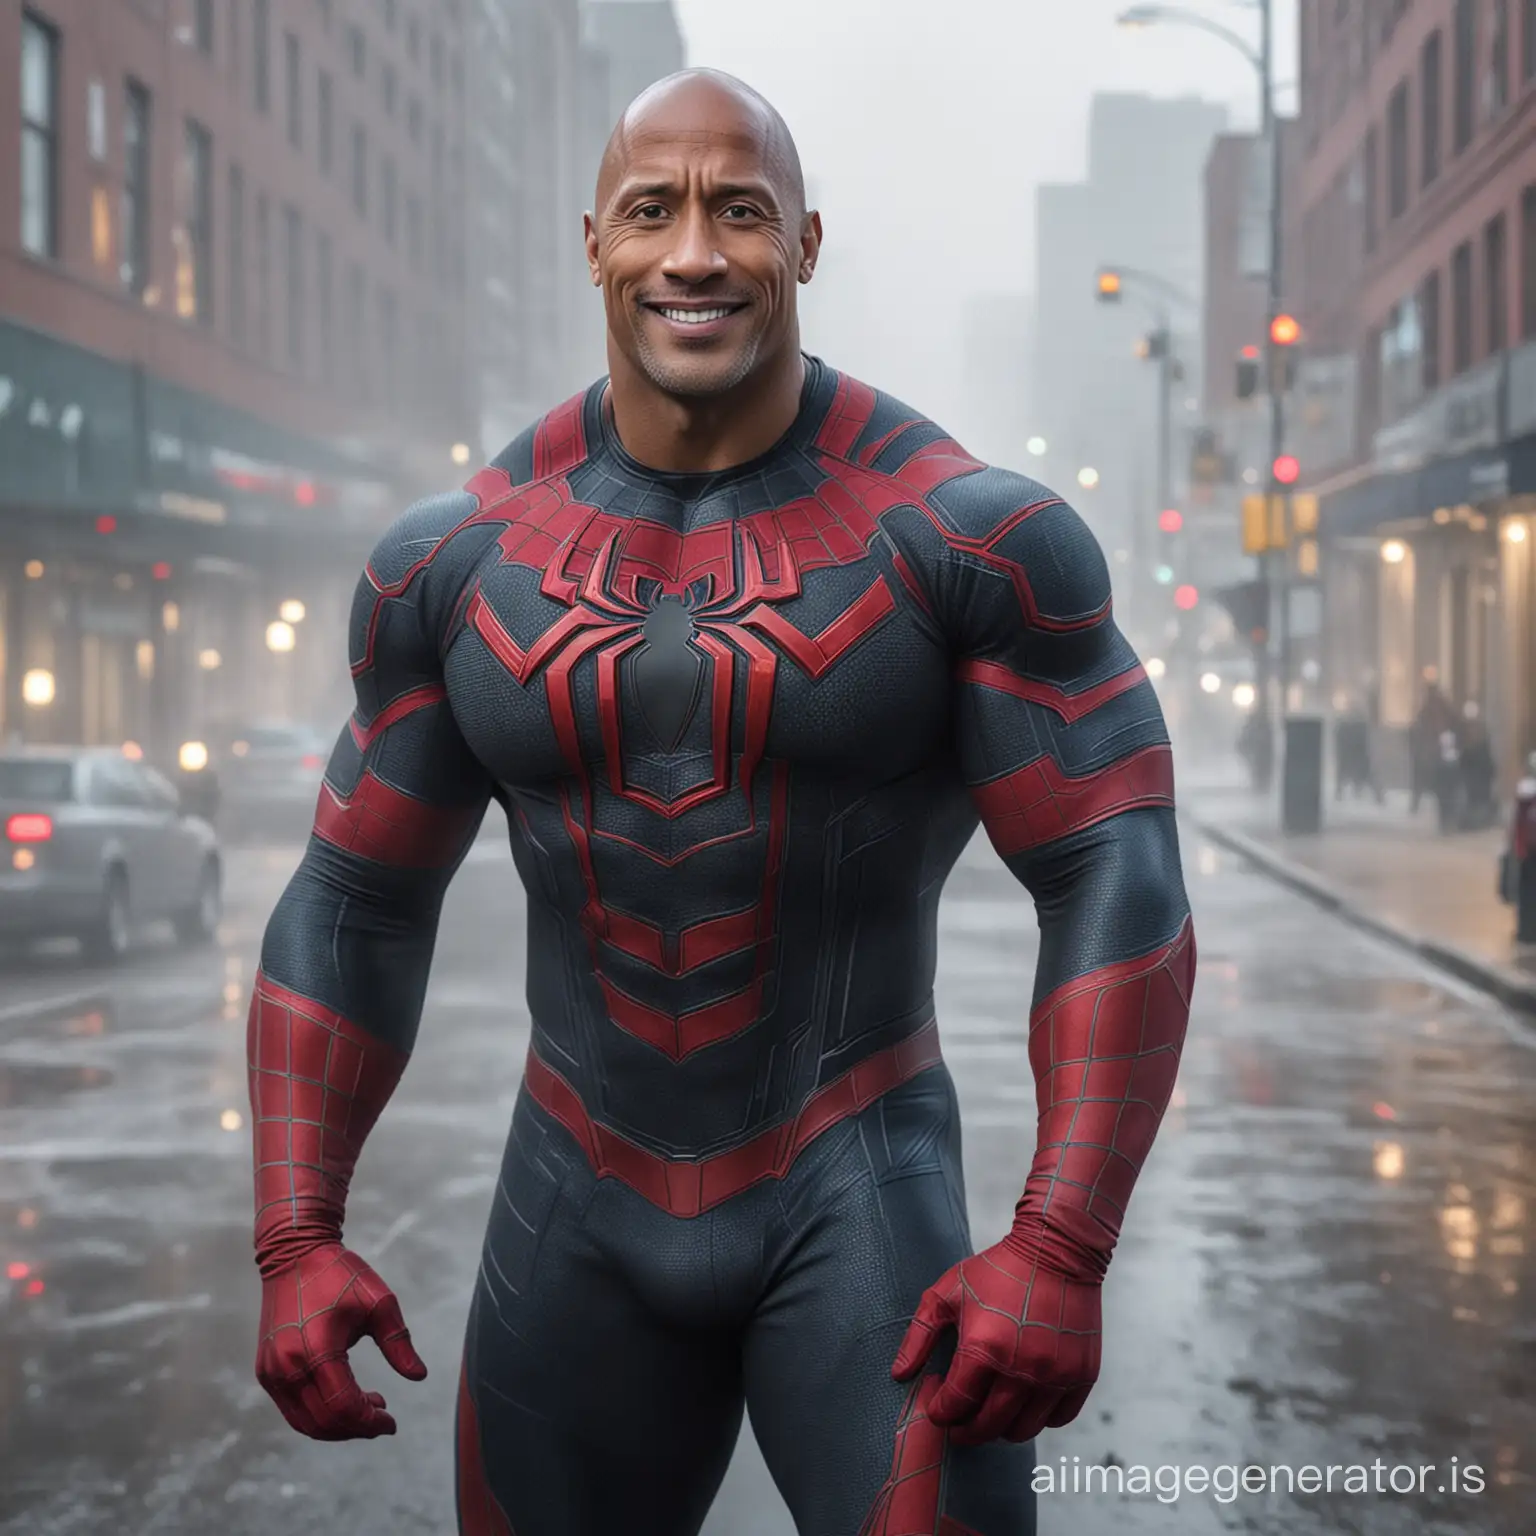 Dwayne-Johnson-Posing-in-Spiderman-Suit-on-a-Foggy-Canadian-Street